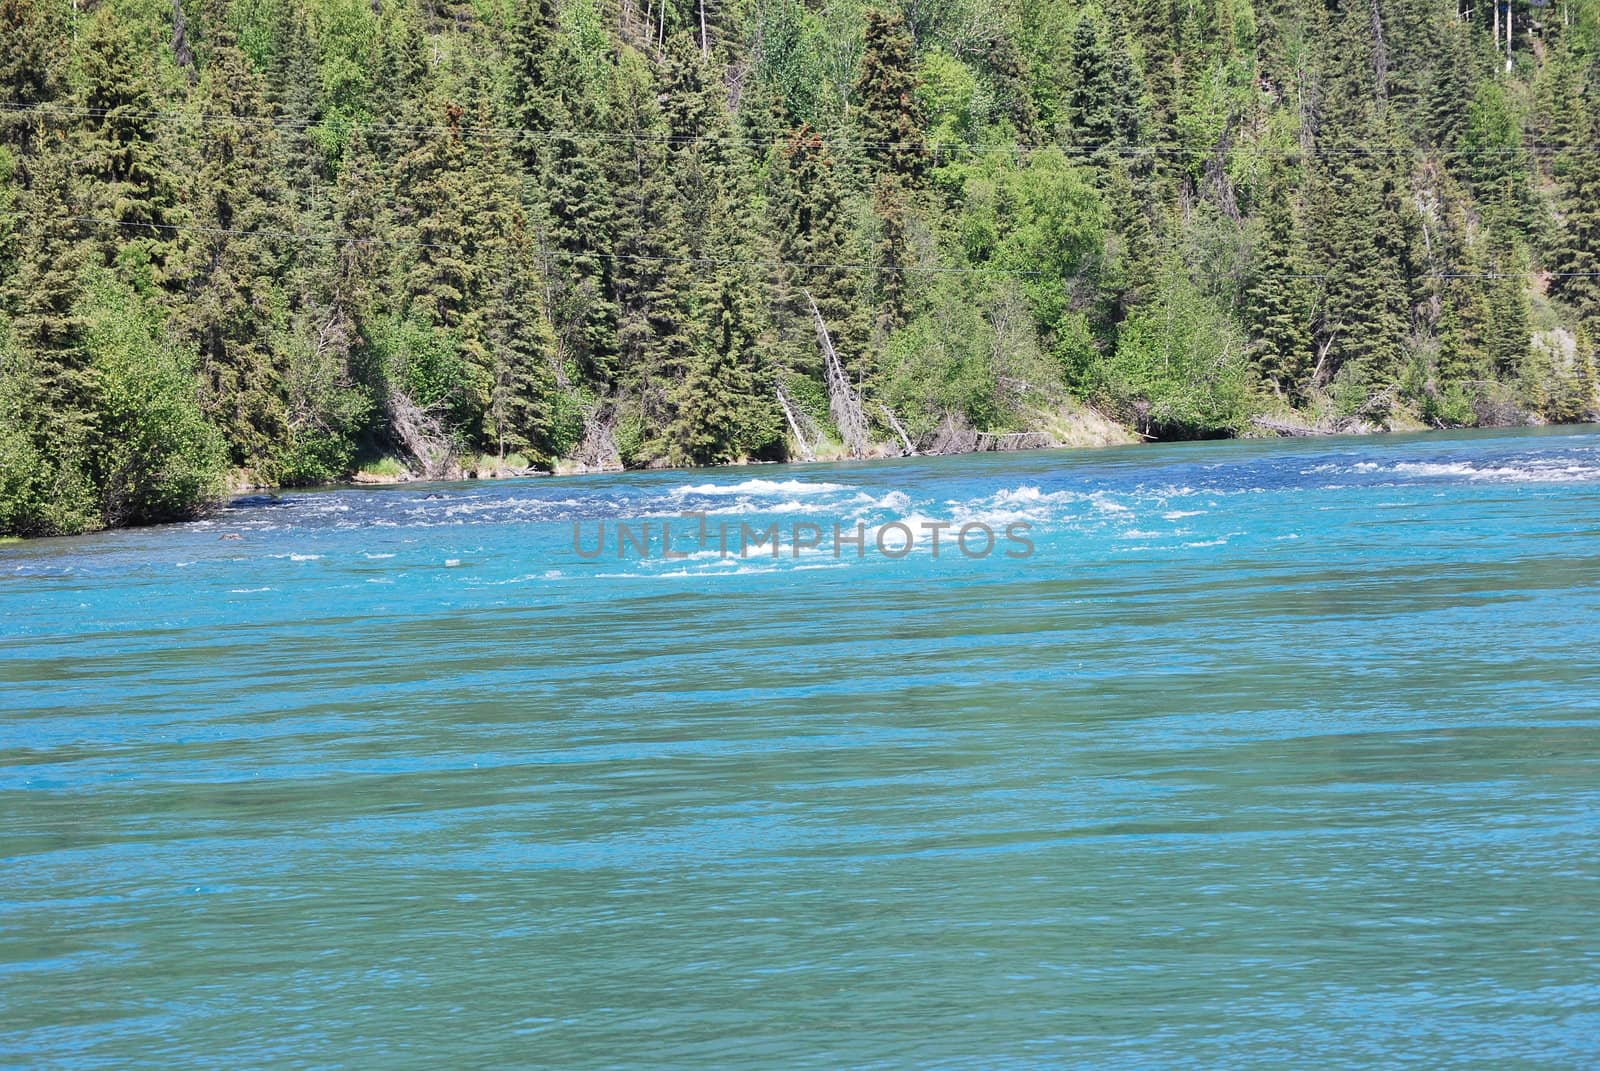 A small rapid on the Kenai River in Alaska